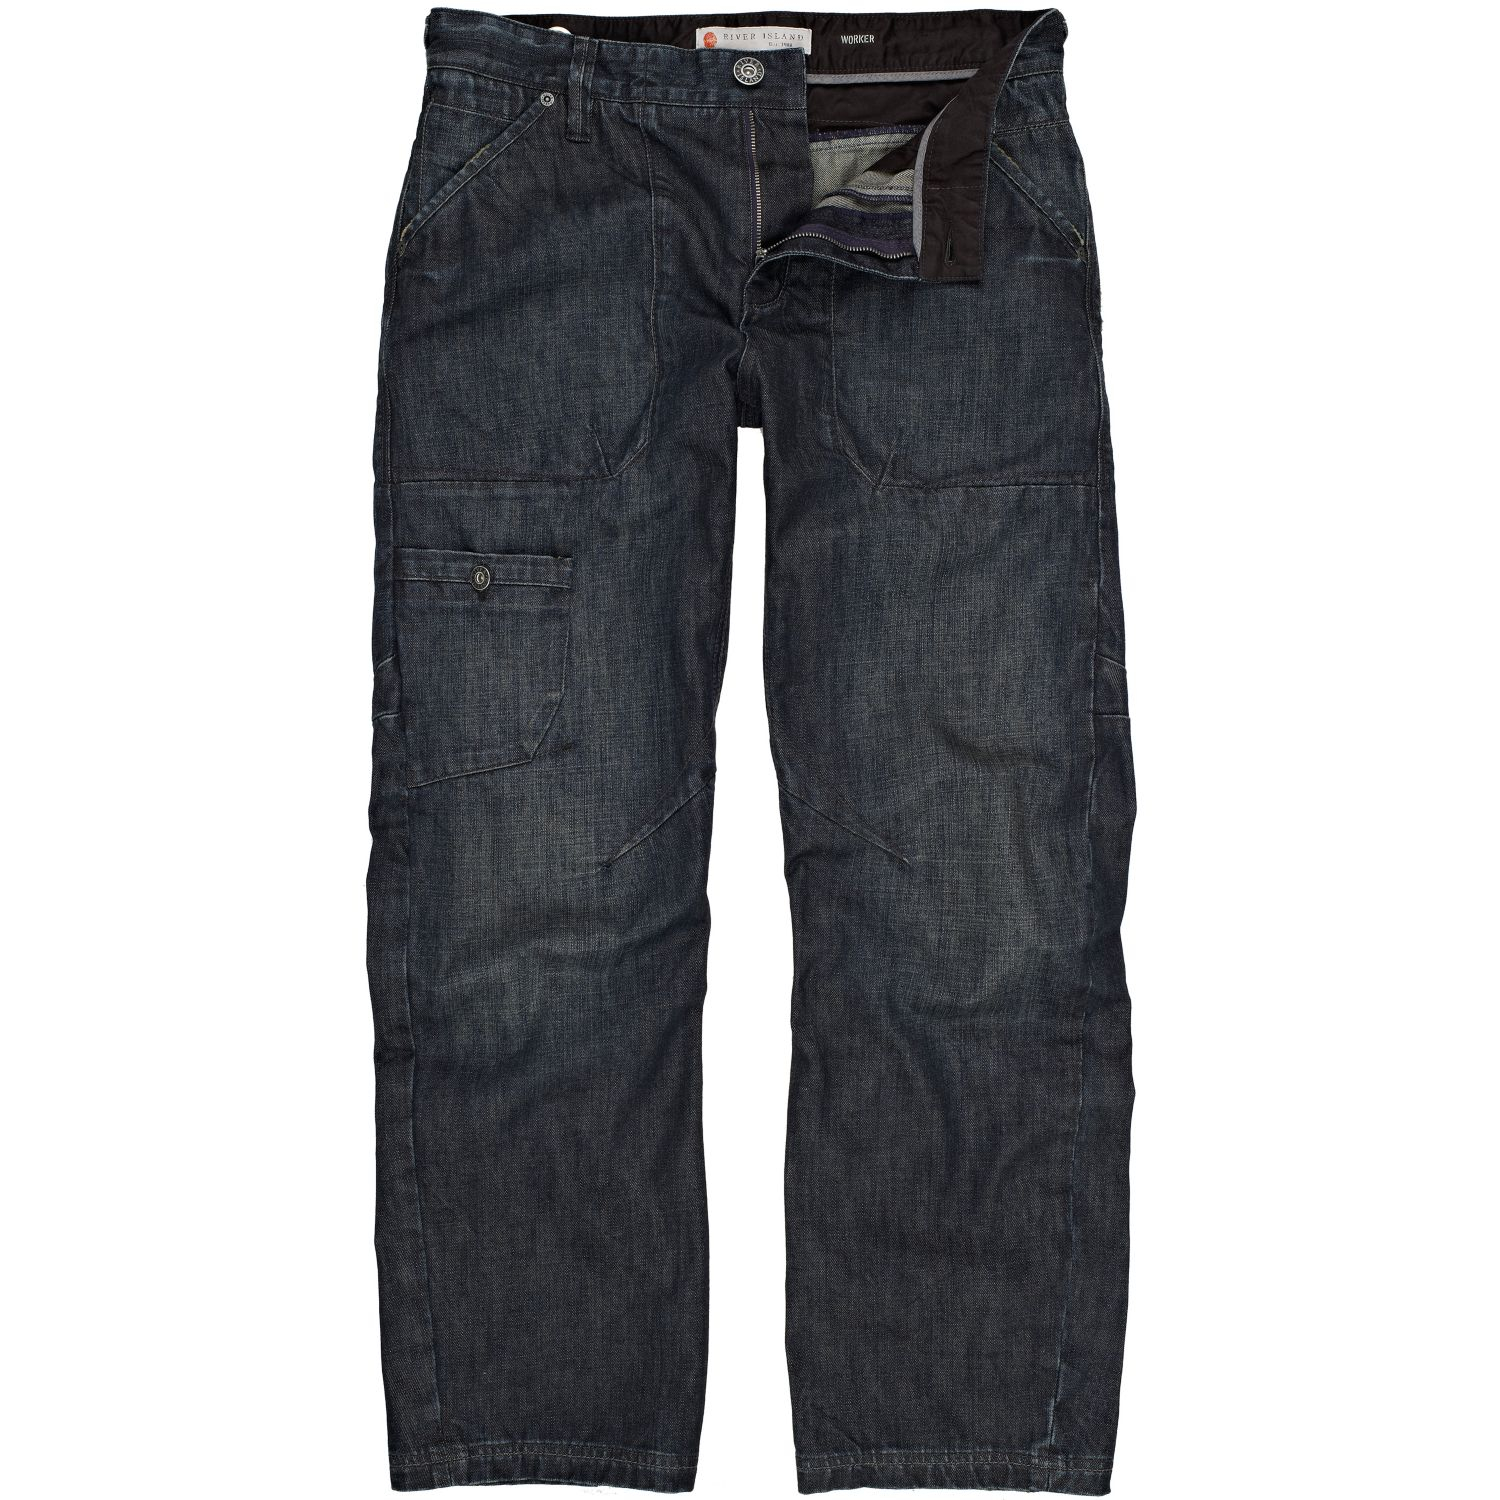 Lyst - River Island Dark Wash Denim Carter Slouch Jeans in Blue for Men